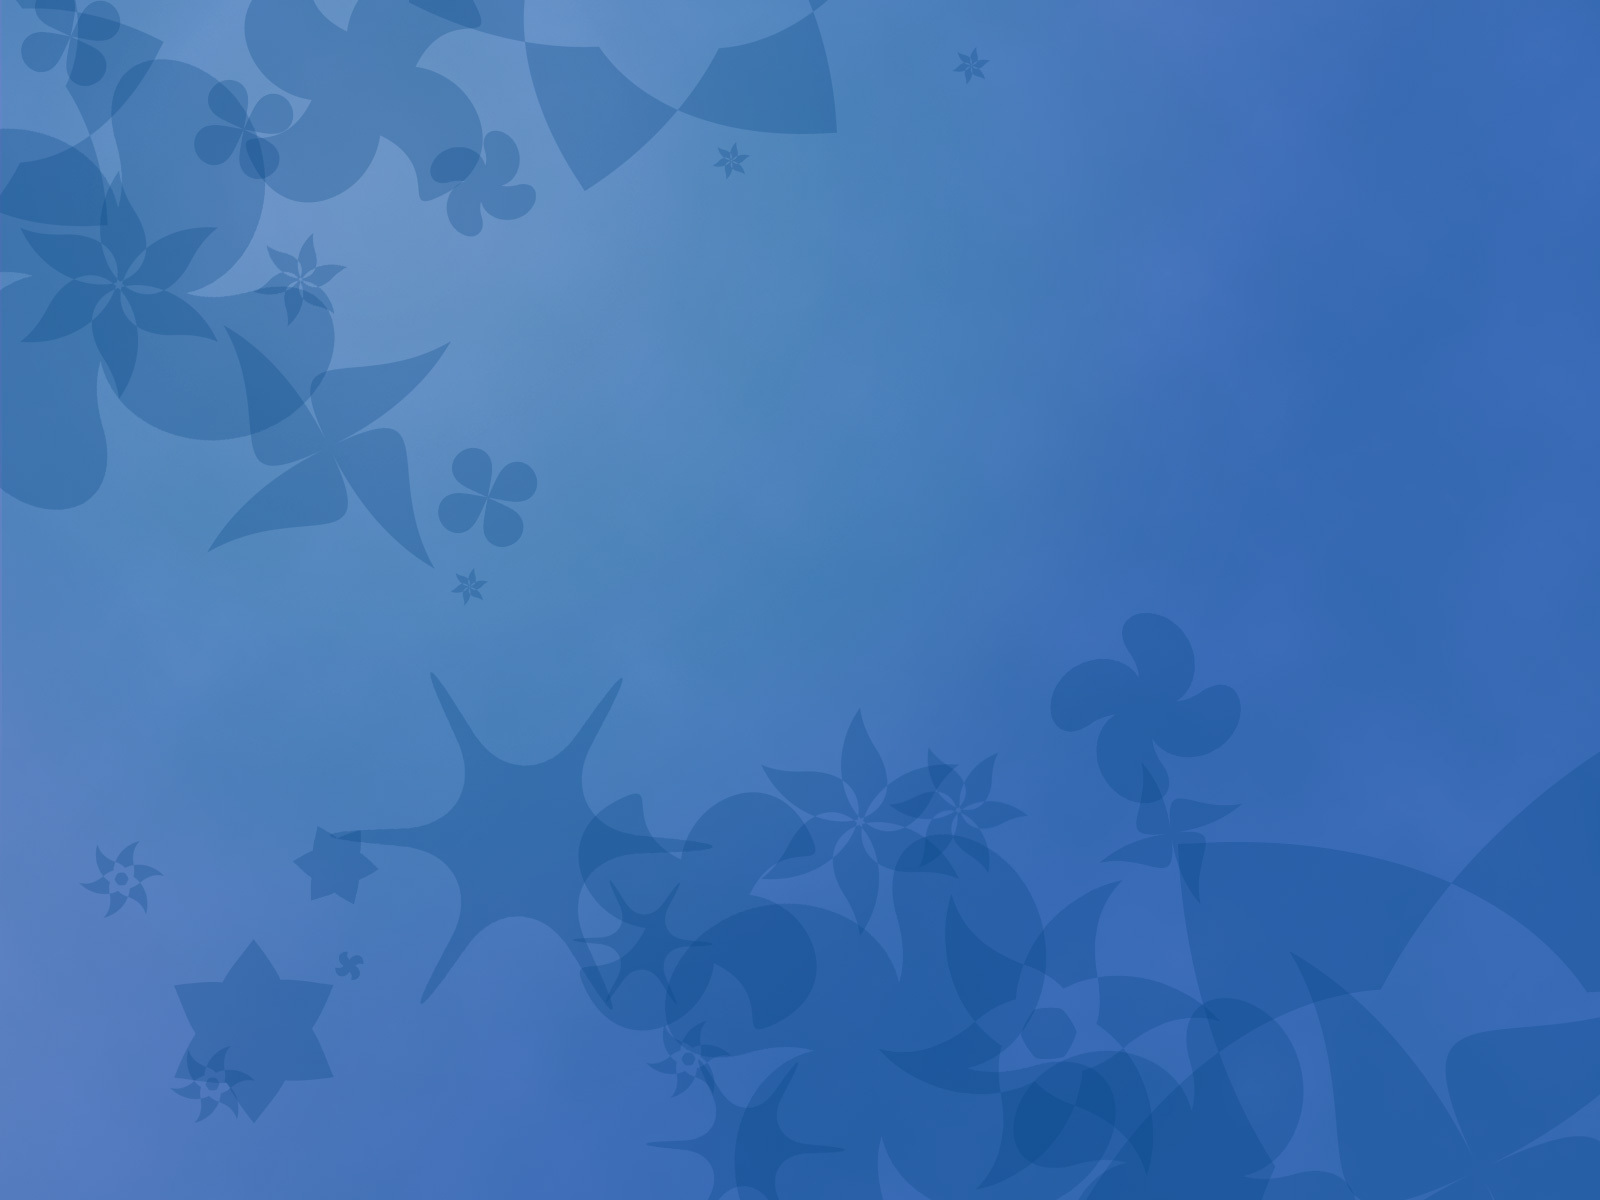 Wallpaper - Blue Wallpaper (4286436) - Fanpop